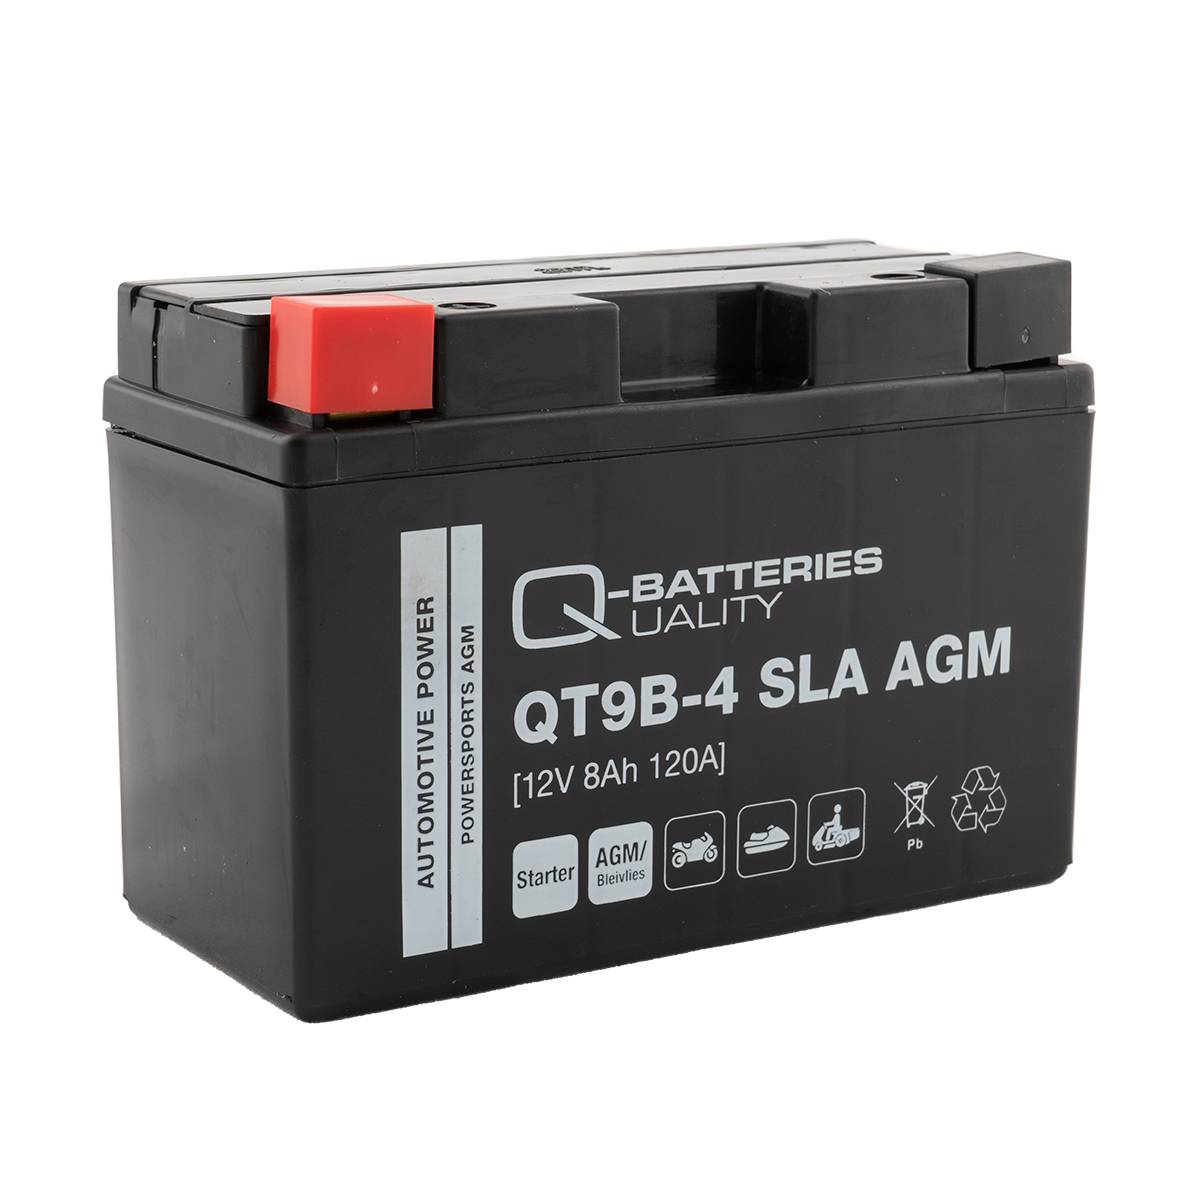 Q-Batteries QT9B-4 AGM Motorradbatterie 12V 8Ah 120A